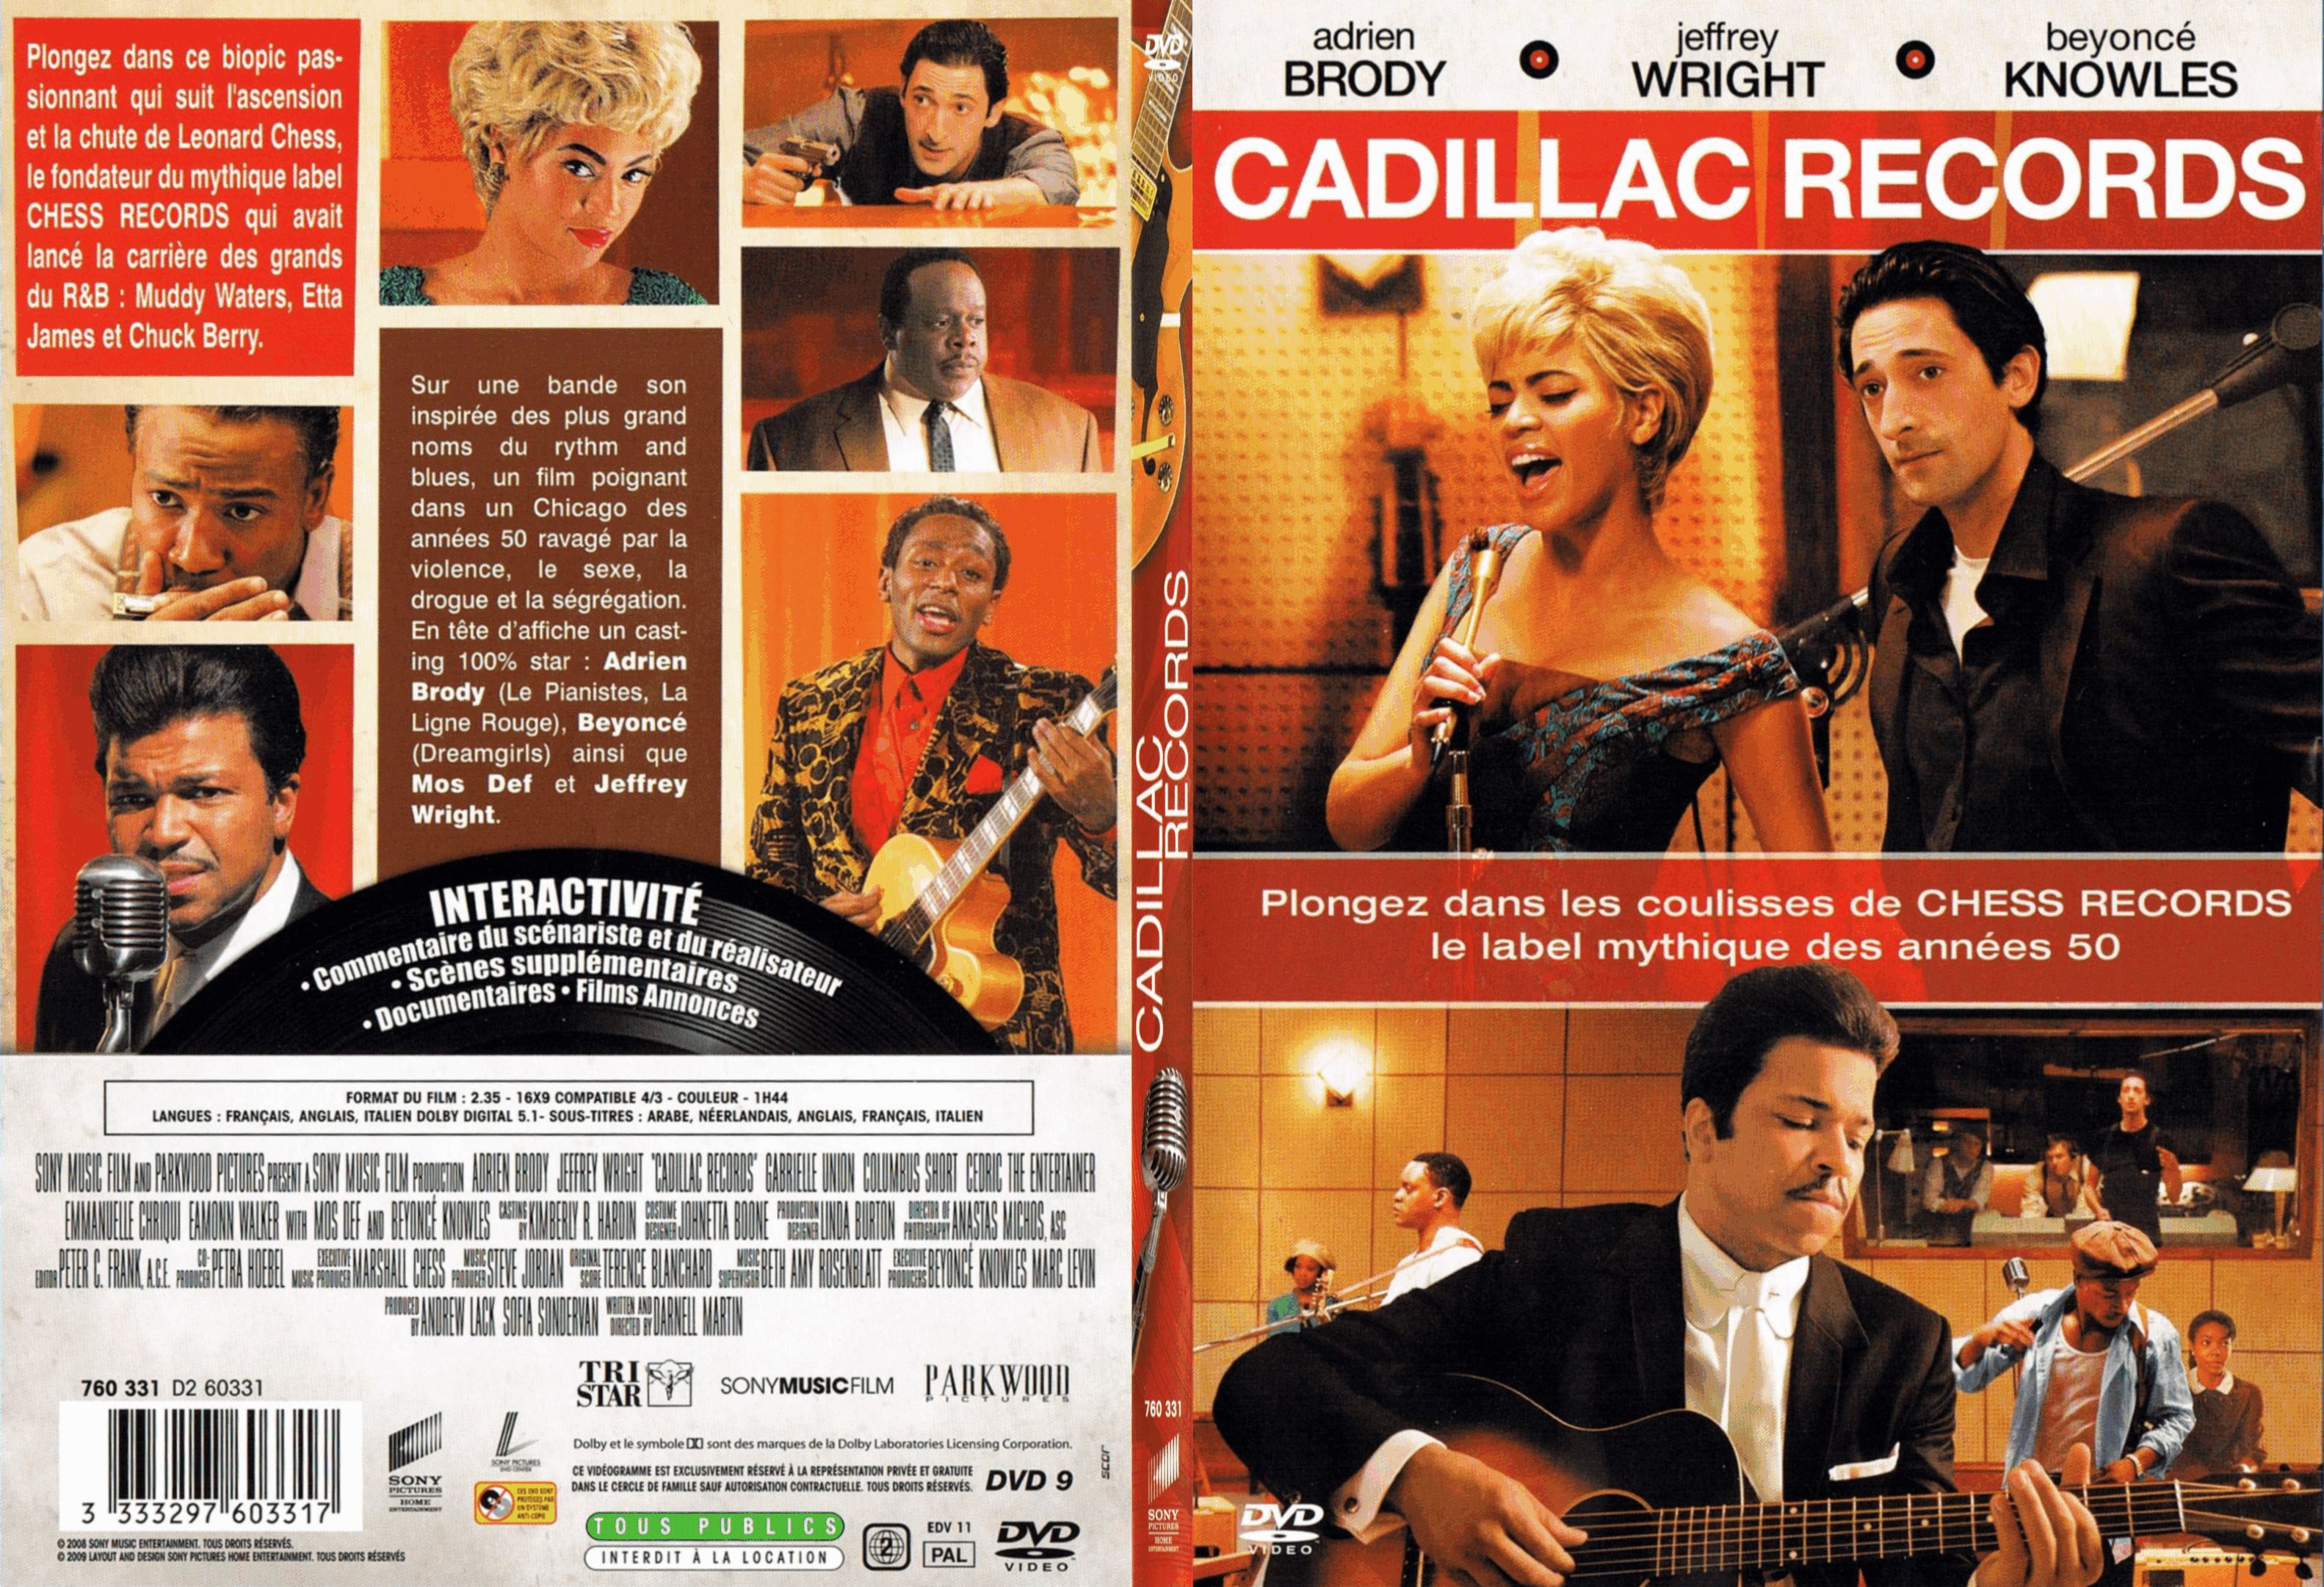 Jaquette DVD Cadillac records - SLIM